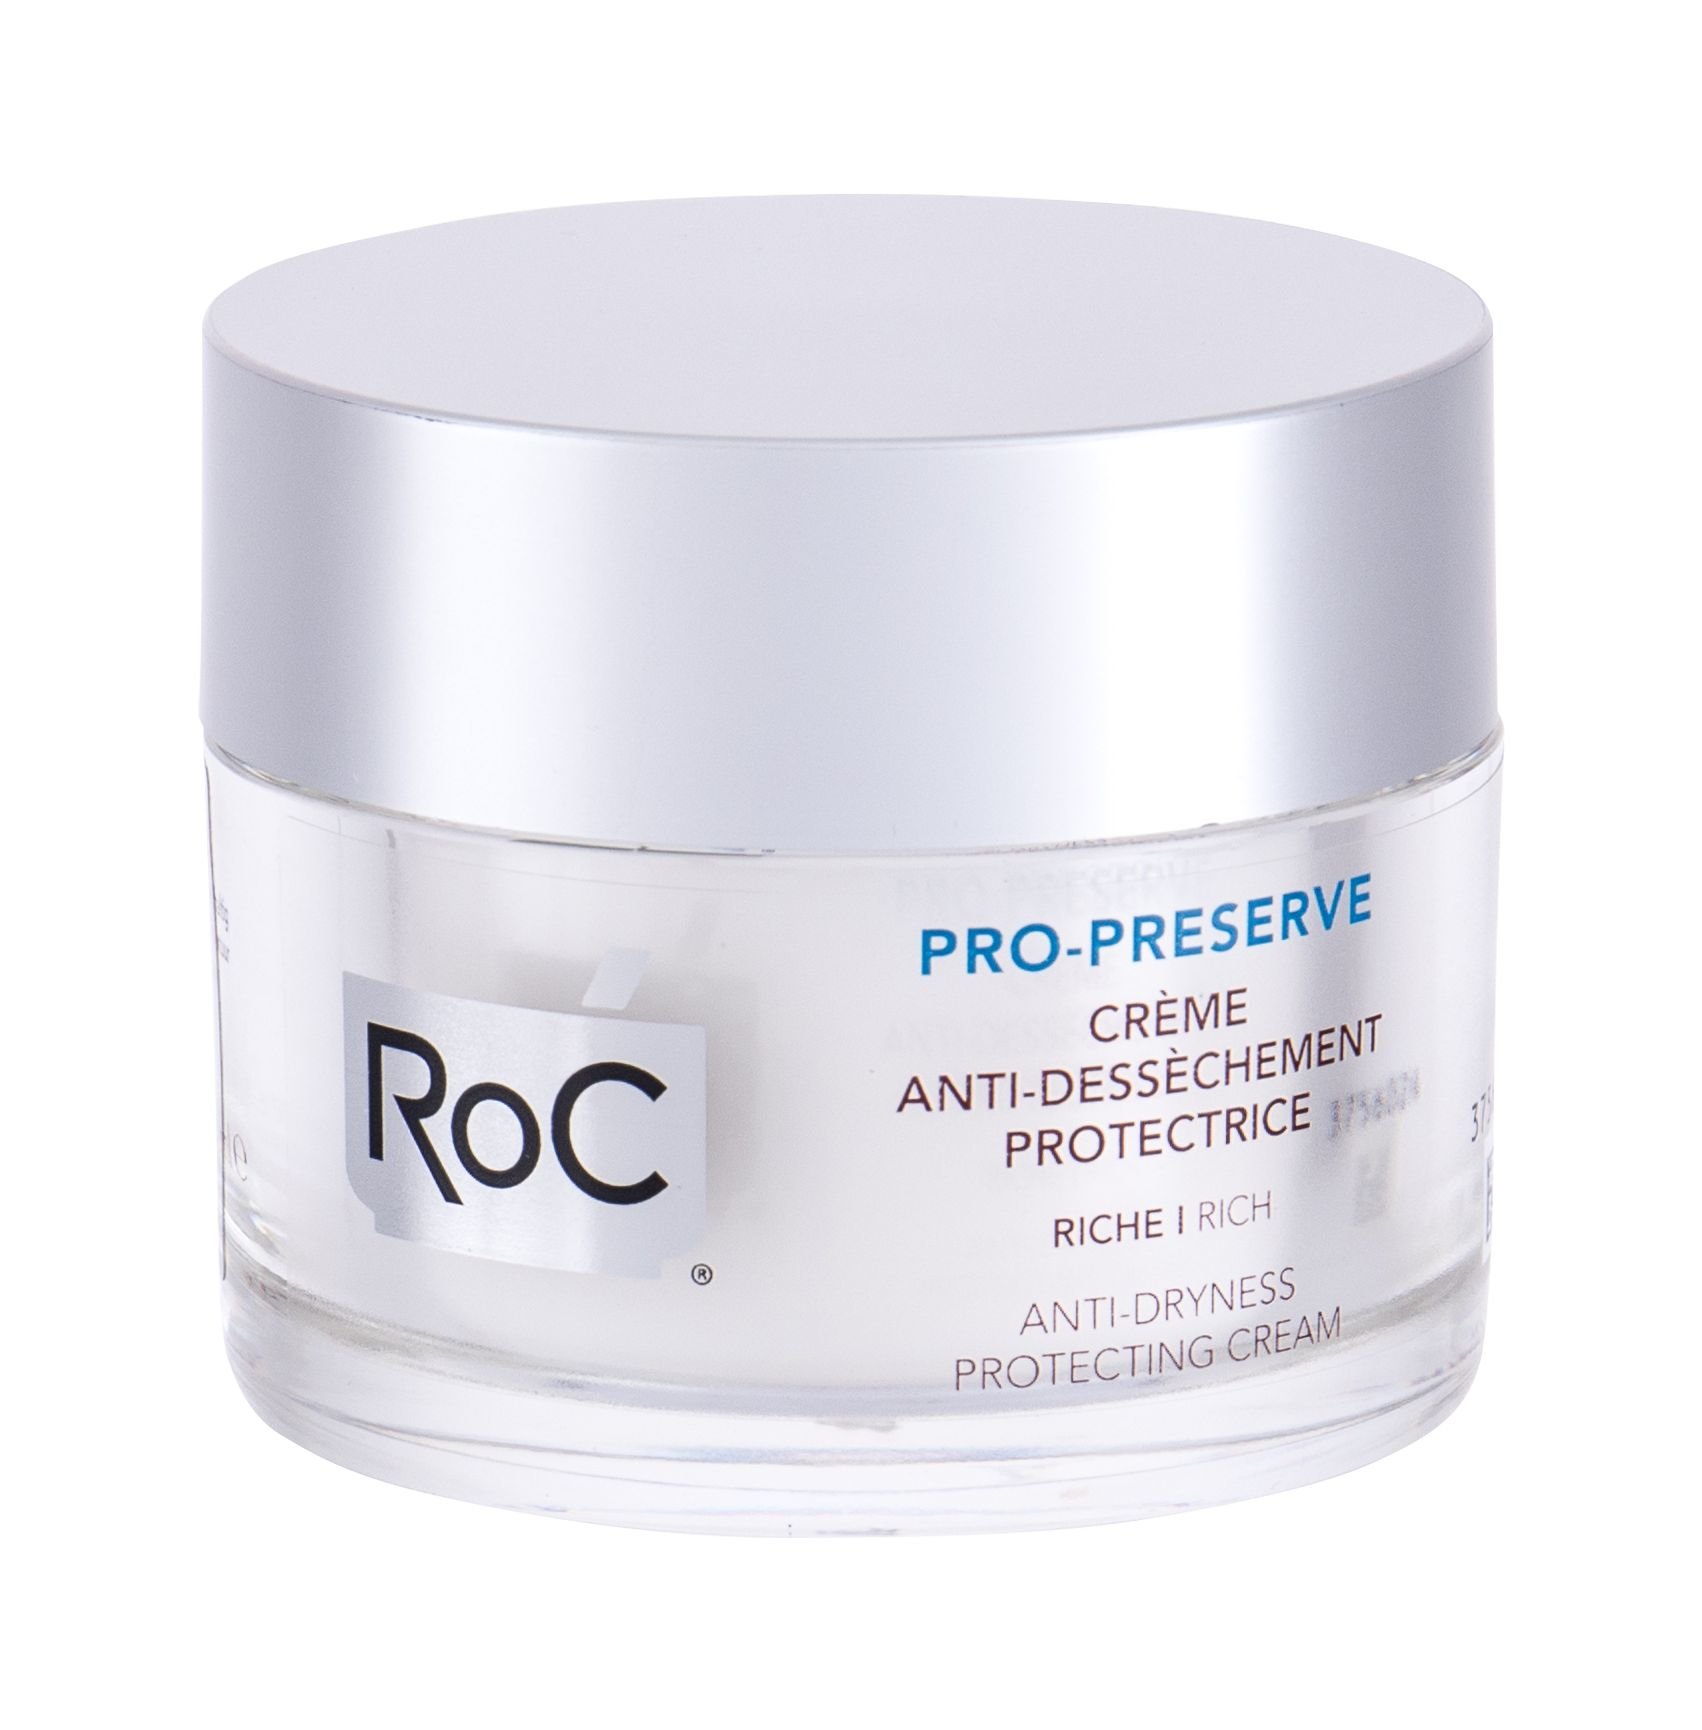 RoC Pro-Preserve